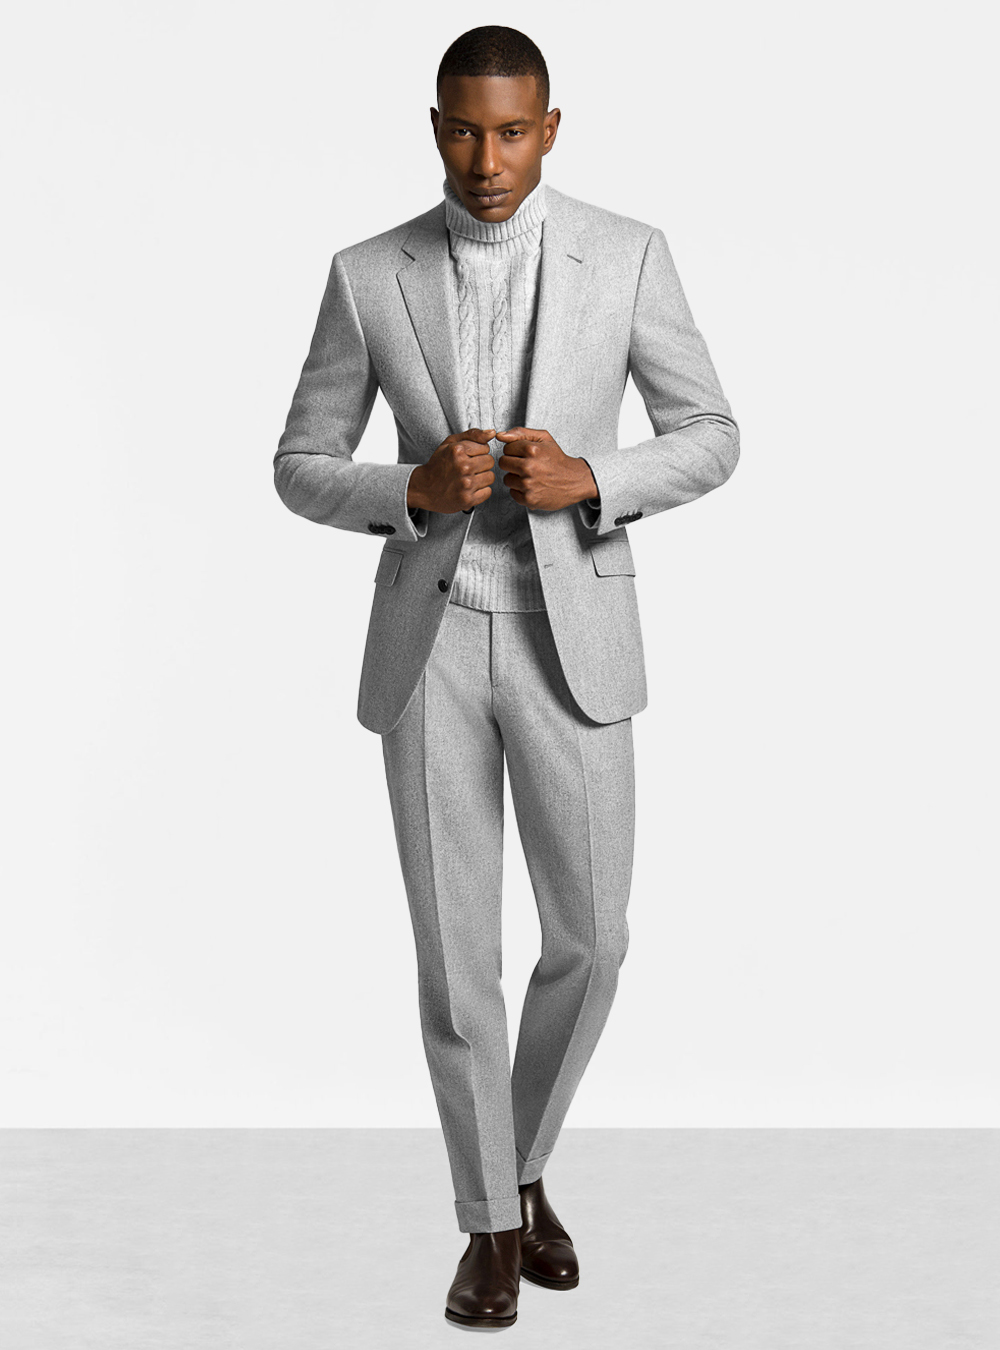 light grey suit, beige turtleneck, and brown Chelsea boots